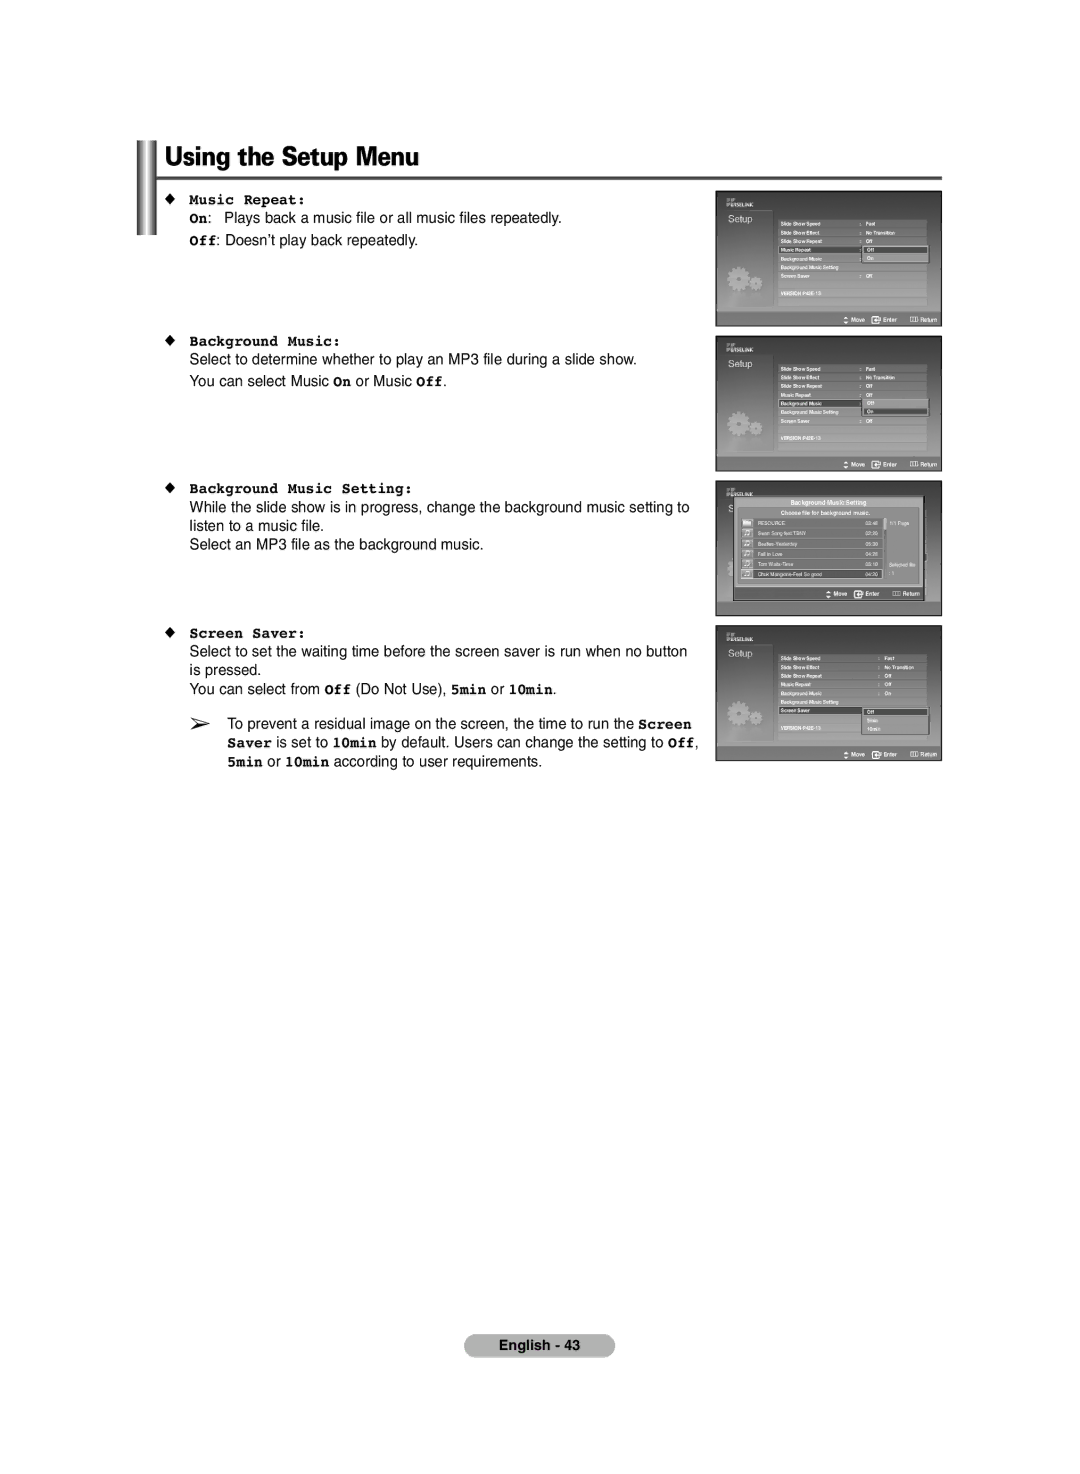 Samsung BN68-00990V-03 manual Music Repeat, Screen Saver 